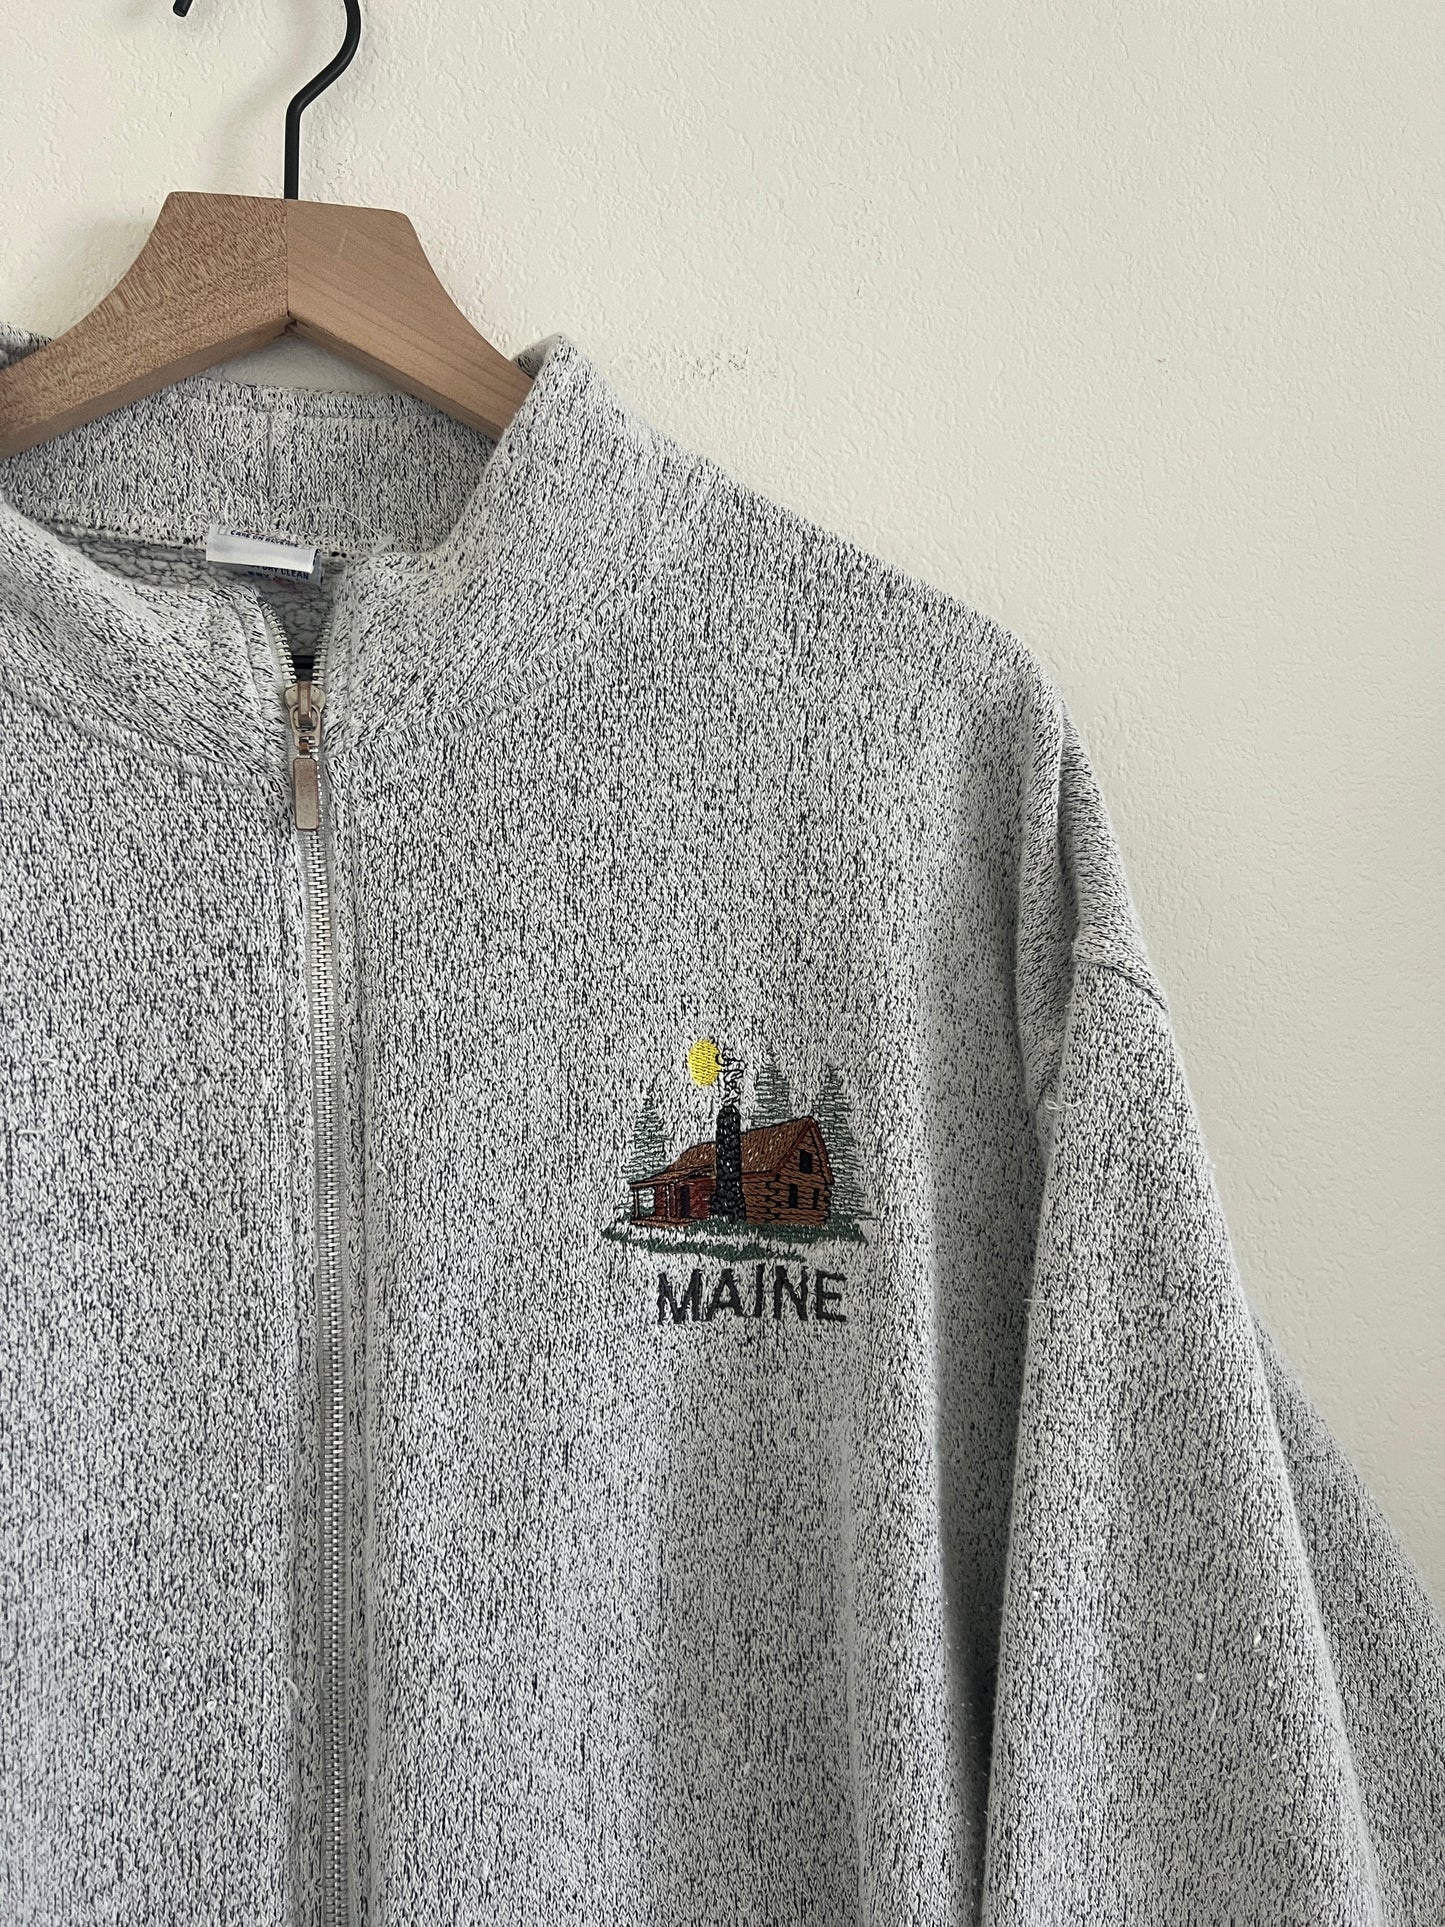 Vintage Maine Zip Up (XL)